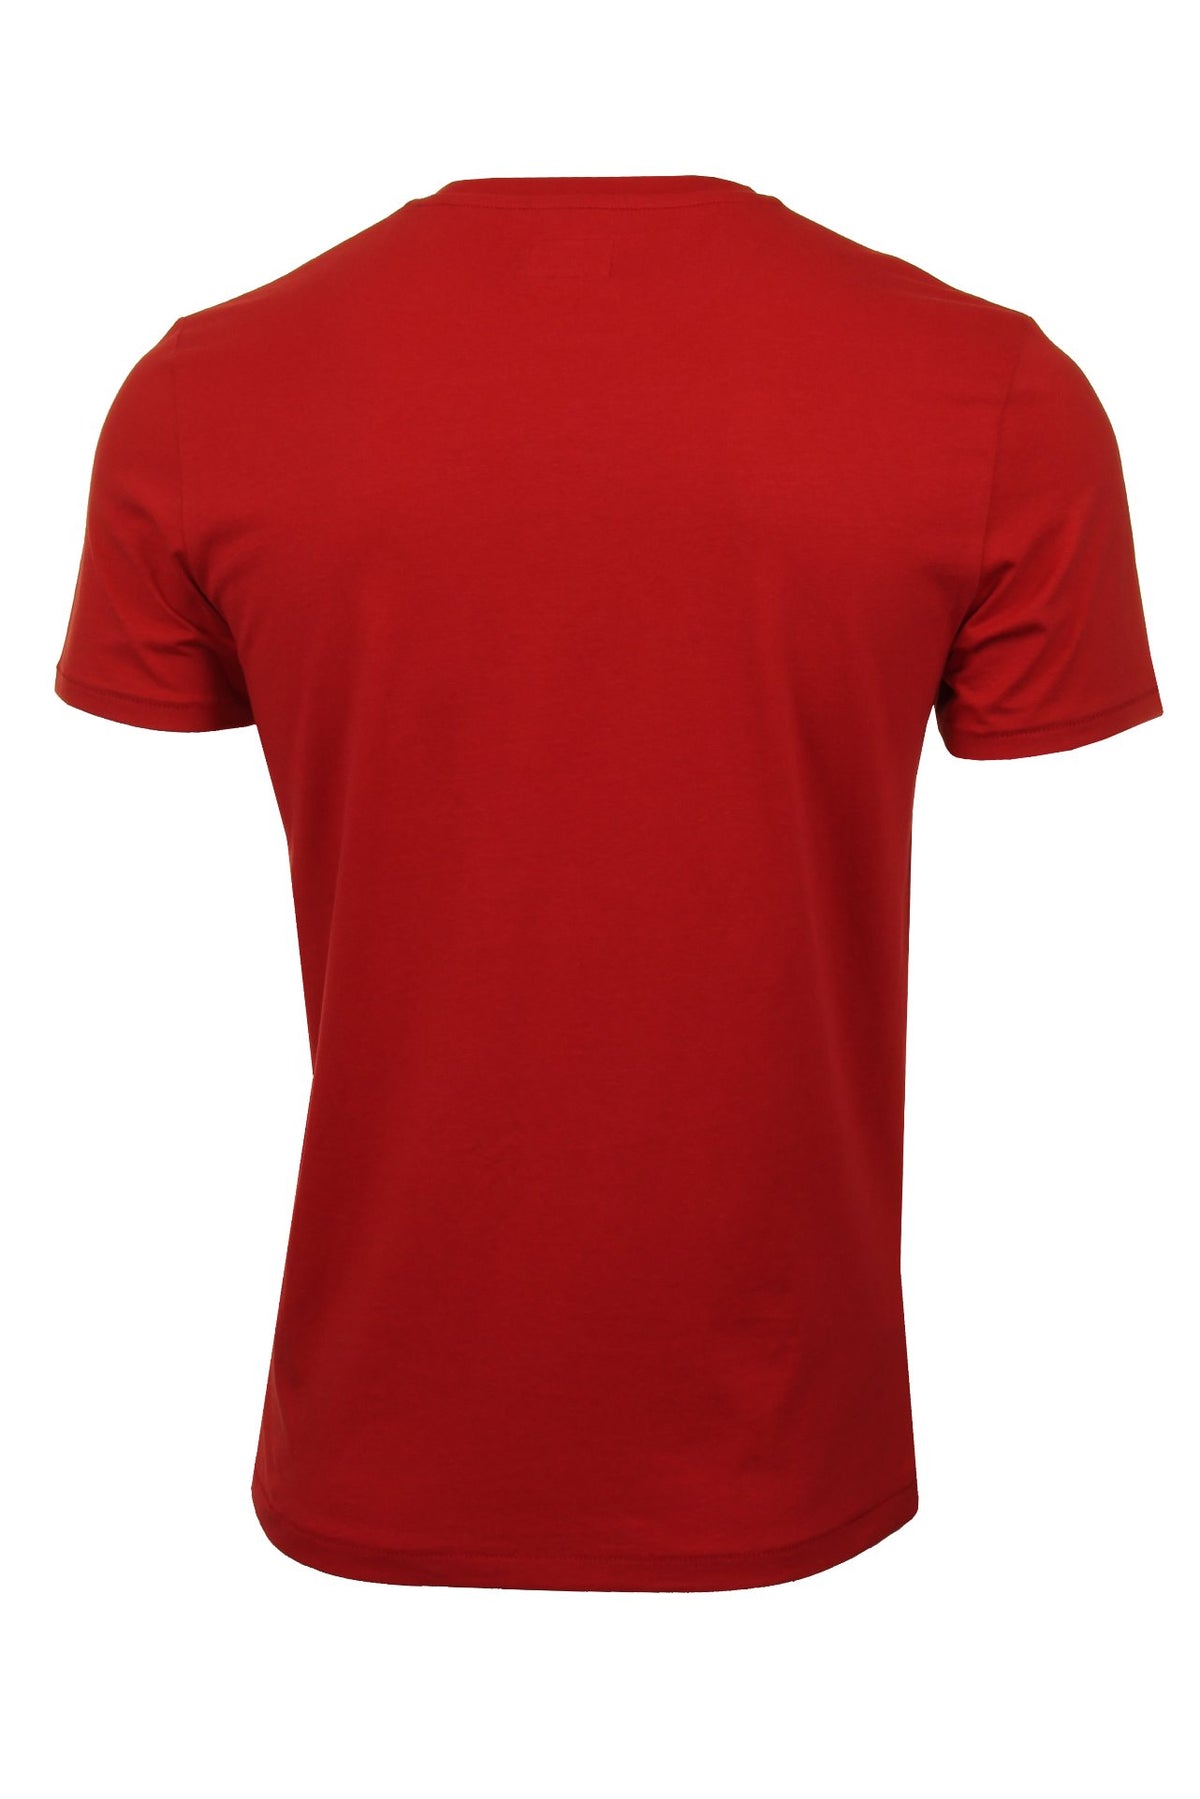 Mens Wrangler T-Shirt  'SS Sign Off Tee' Short Sleeve, 03, W7C07D, Scarlet Red